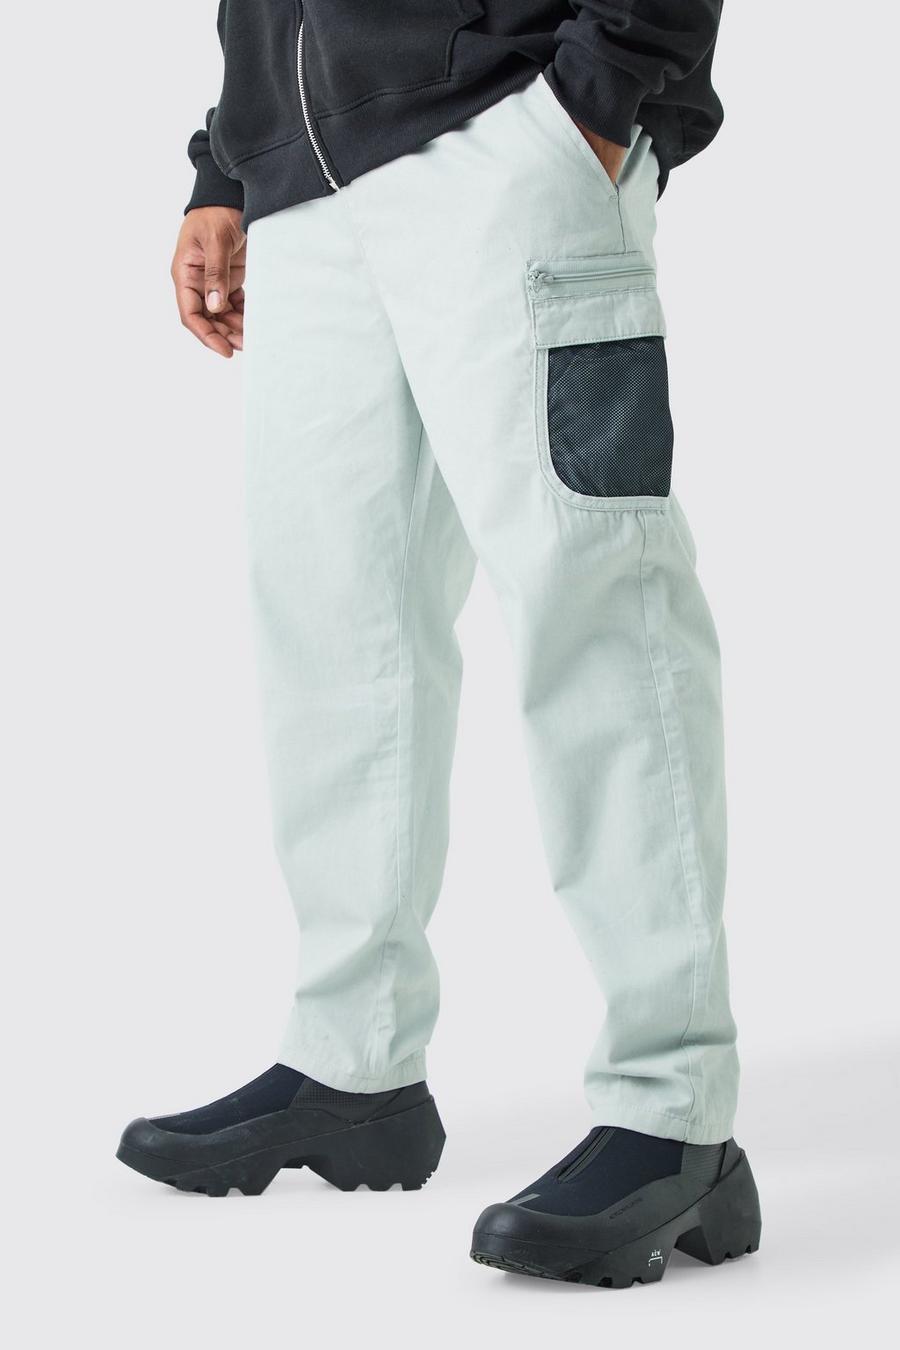 Pantalón Plus elástico cómodo de malla con bolsillos cargo, Light grey